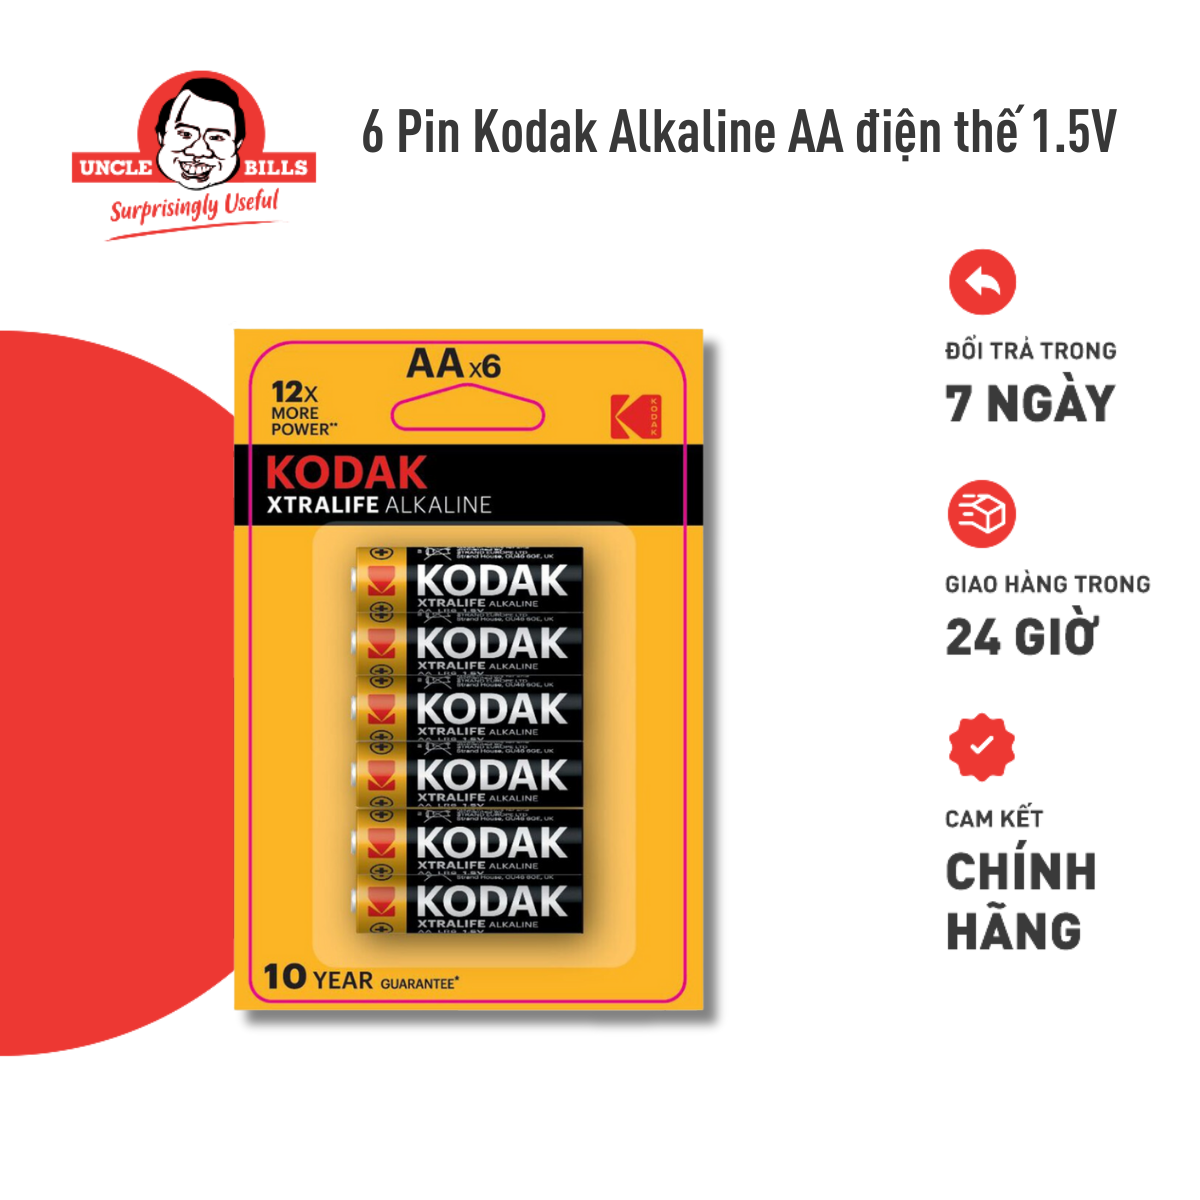 Pin Kodak Alkaline AA điện thế 1.5V Bộ 6 Cái Uncle Bills IB0216